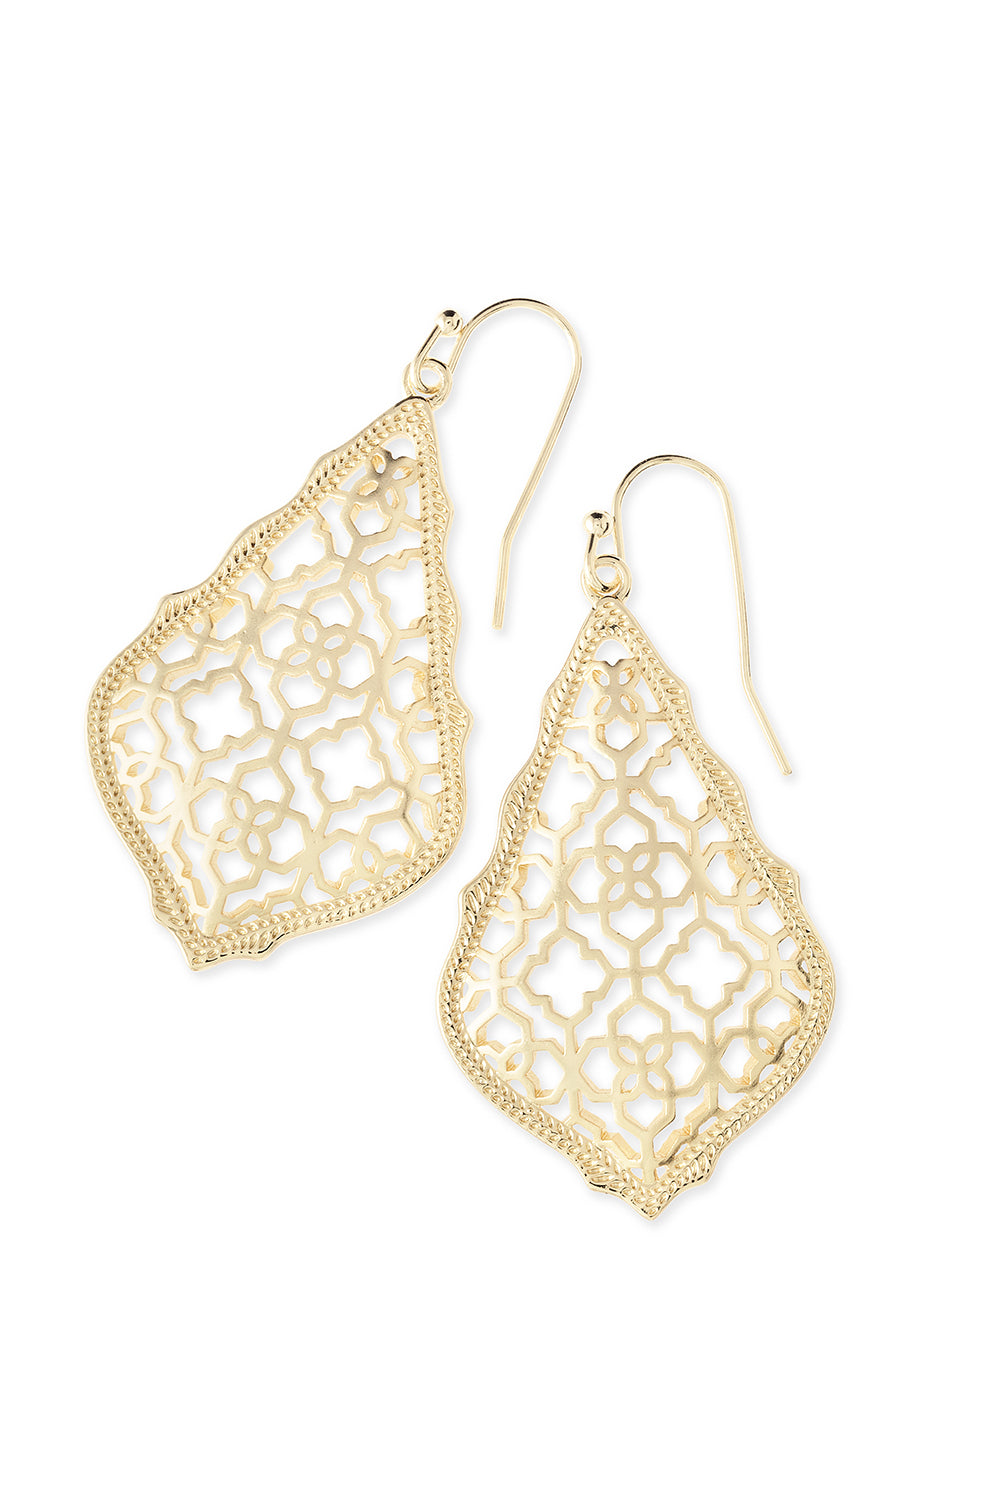 Kendra Scott: Addie Gold Drop Earrings - Gold Filigree | Makk Fashions